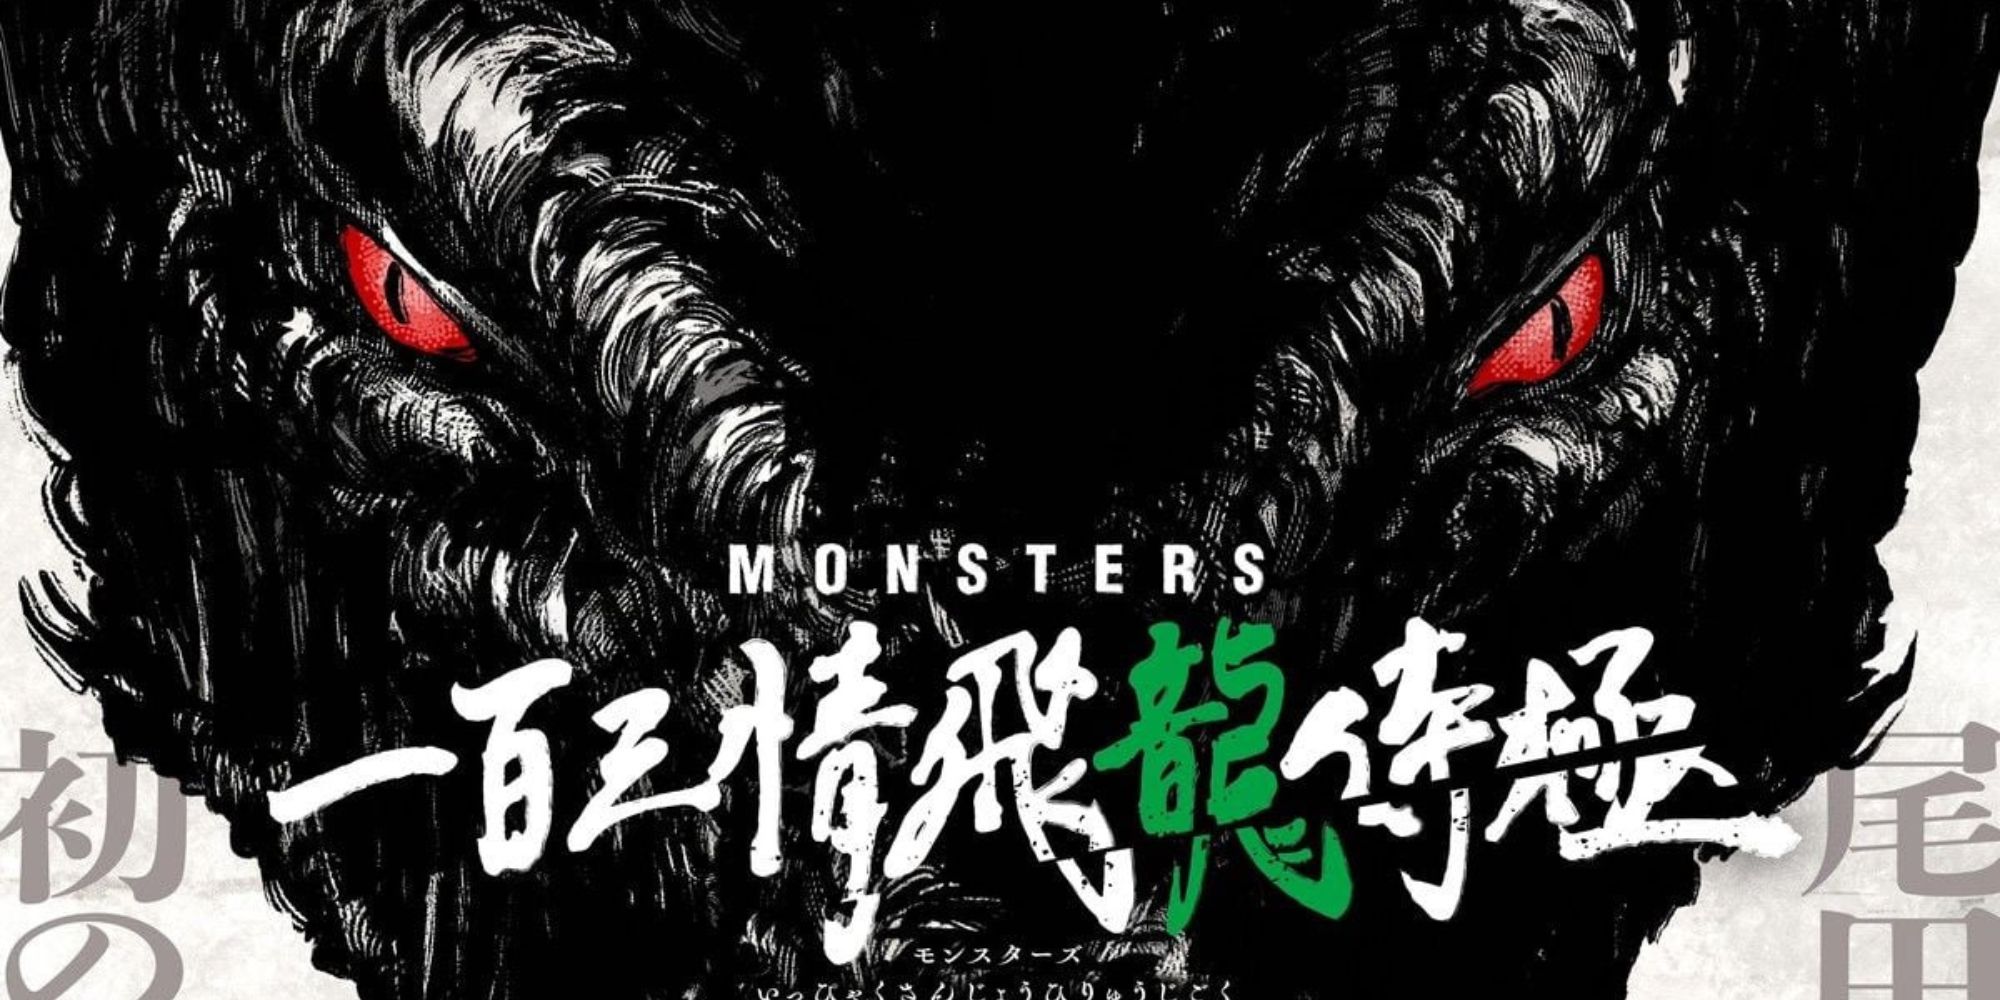 Monsters Manga By Eiichiro Oda To Get An Anime Adaptation